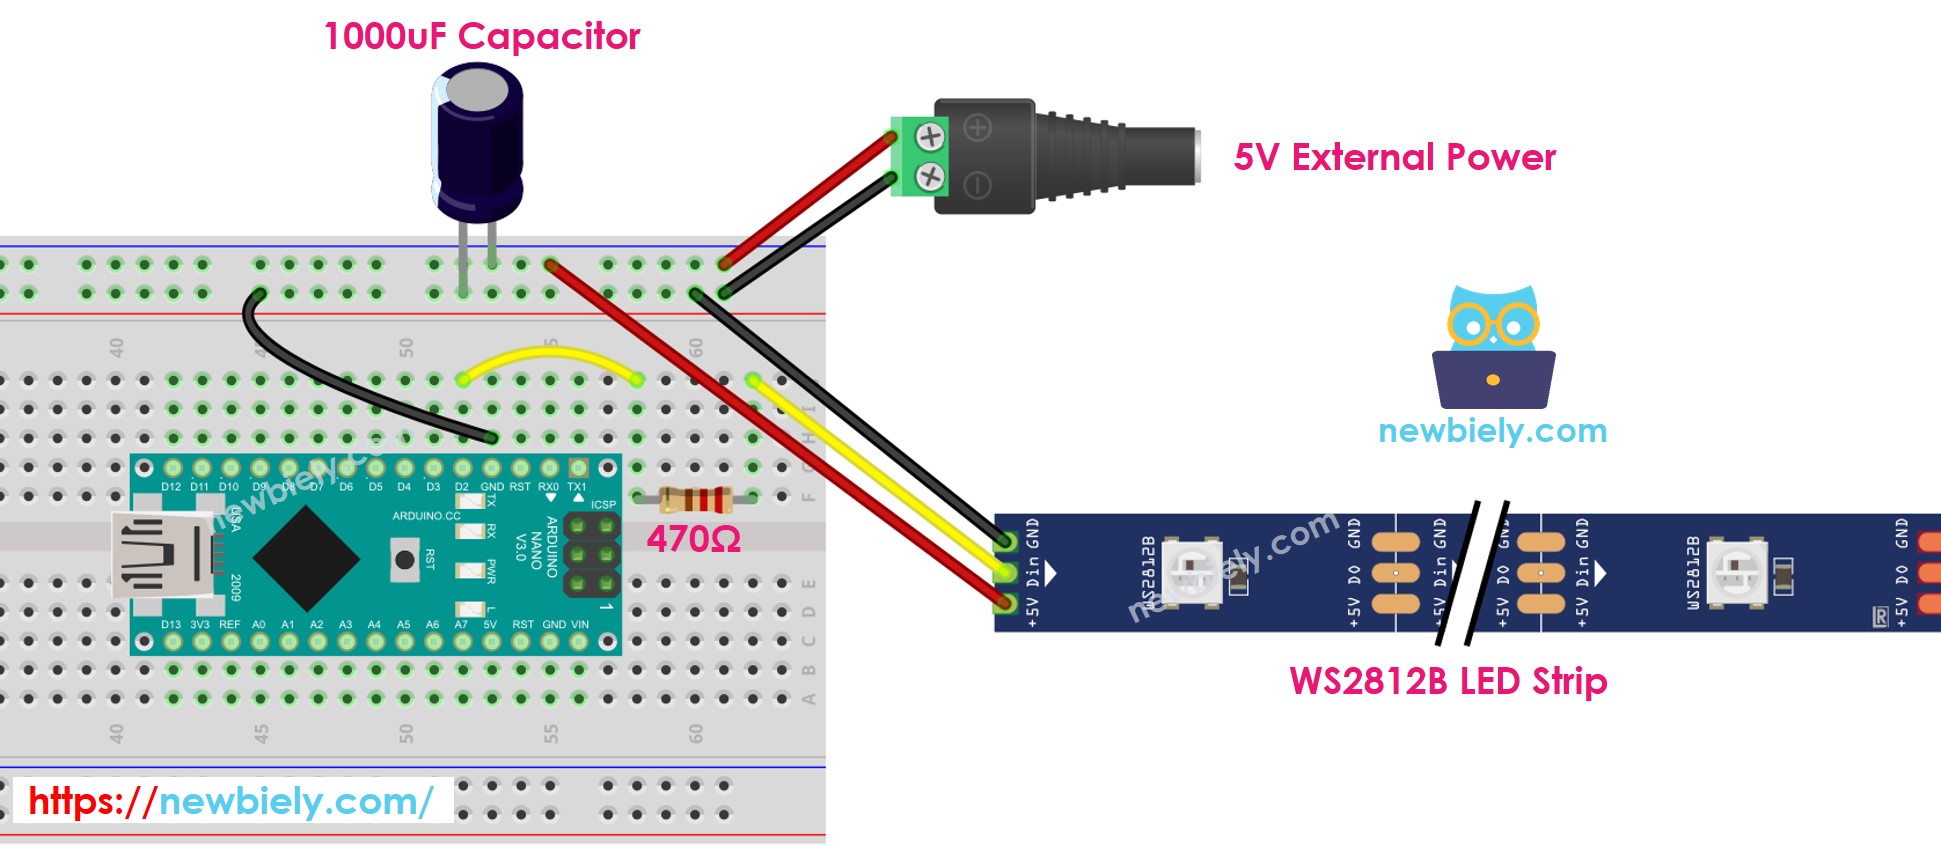 The wiring diagram between Arduino Nano and WS2812B RGB LED strip